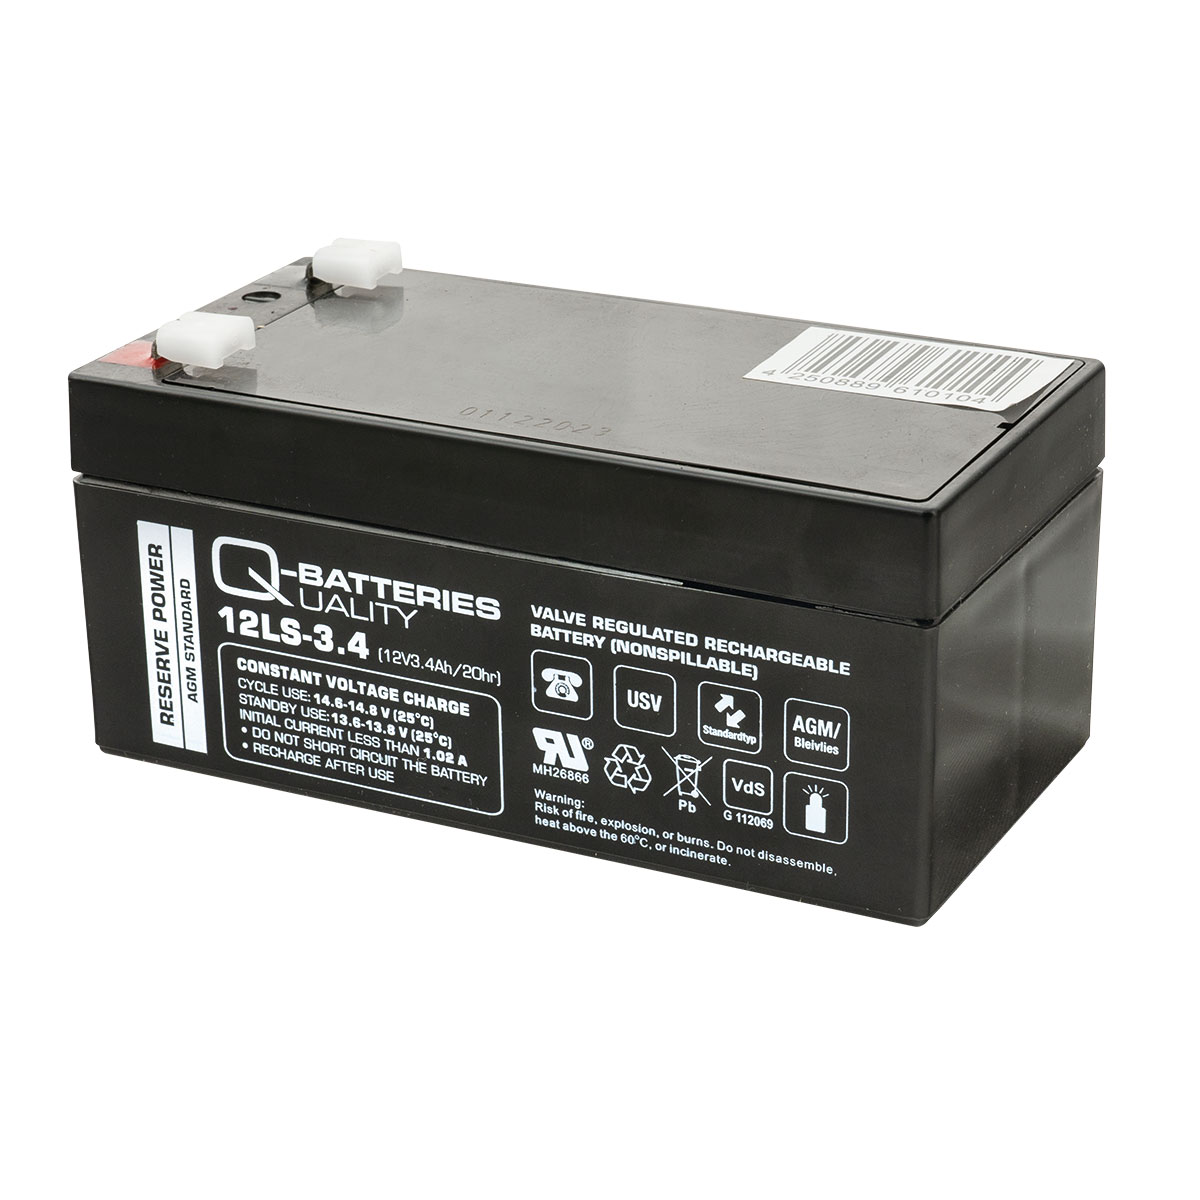 Q-Batteries 12LS-3.4 12V 3,4Ah Blei-Vlies Akku / AGM VRLA mit VdS